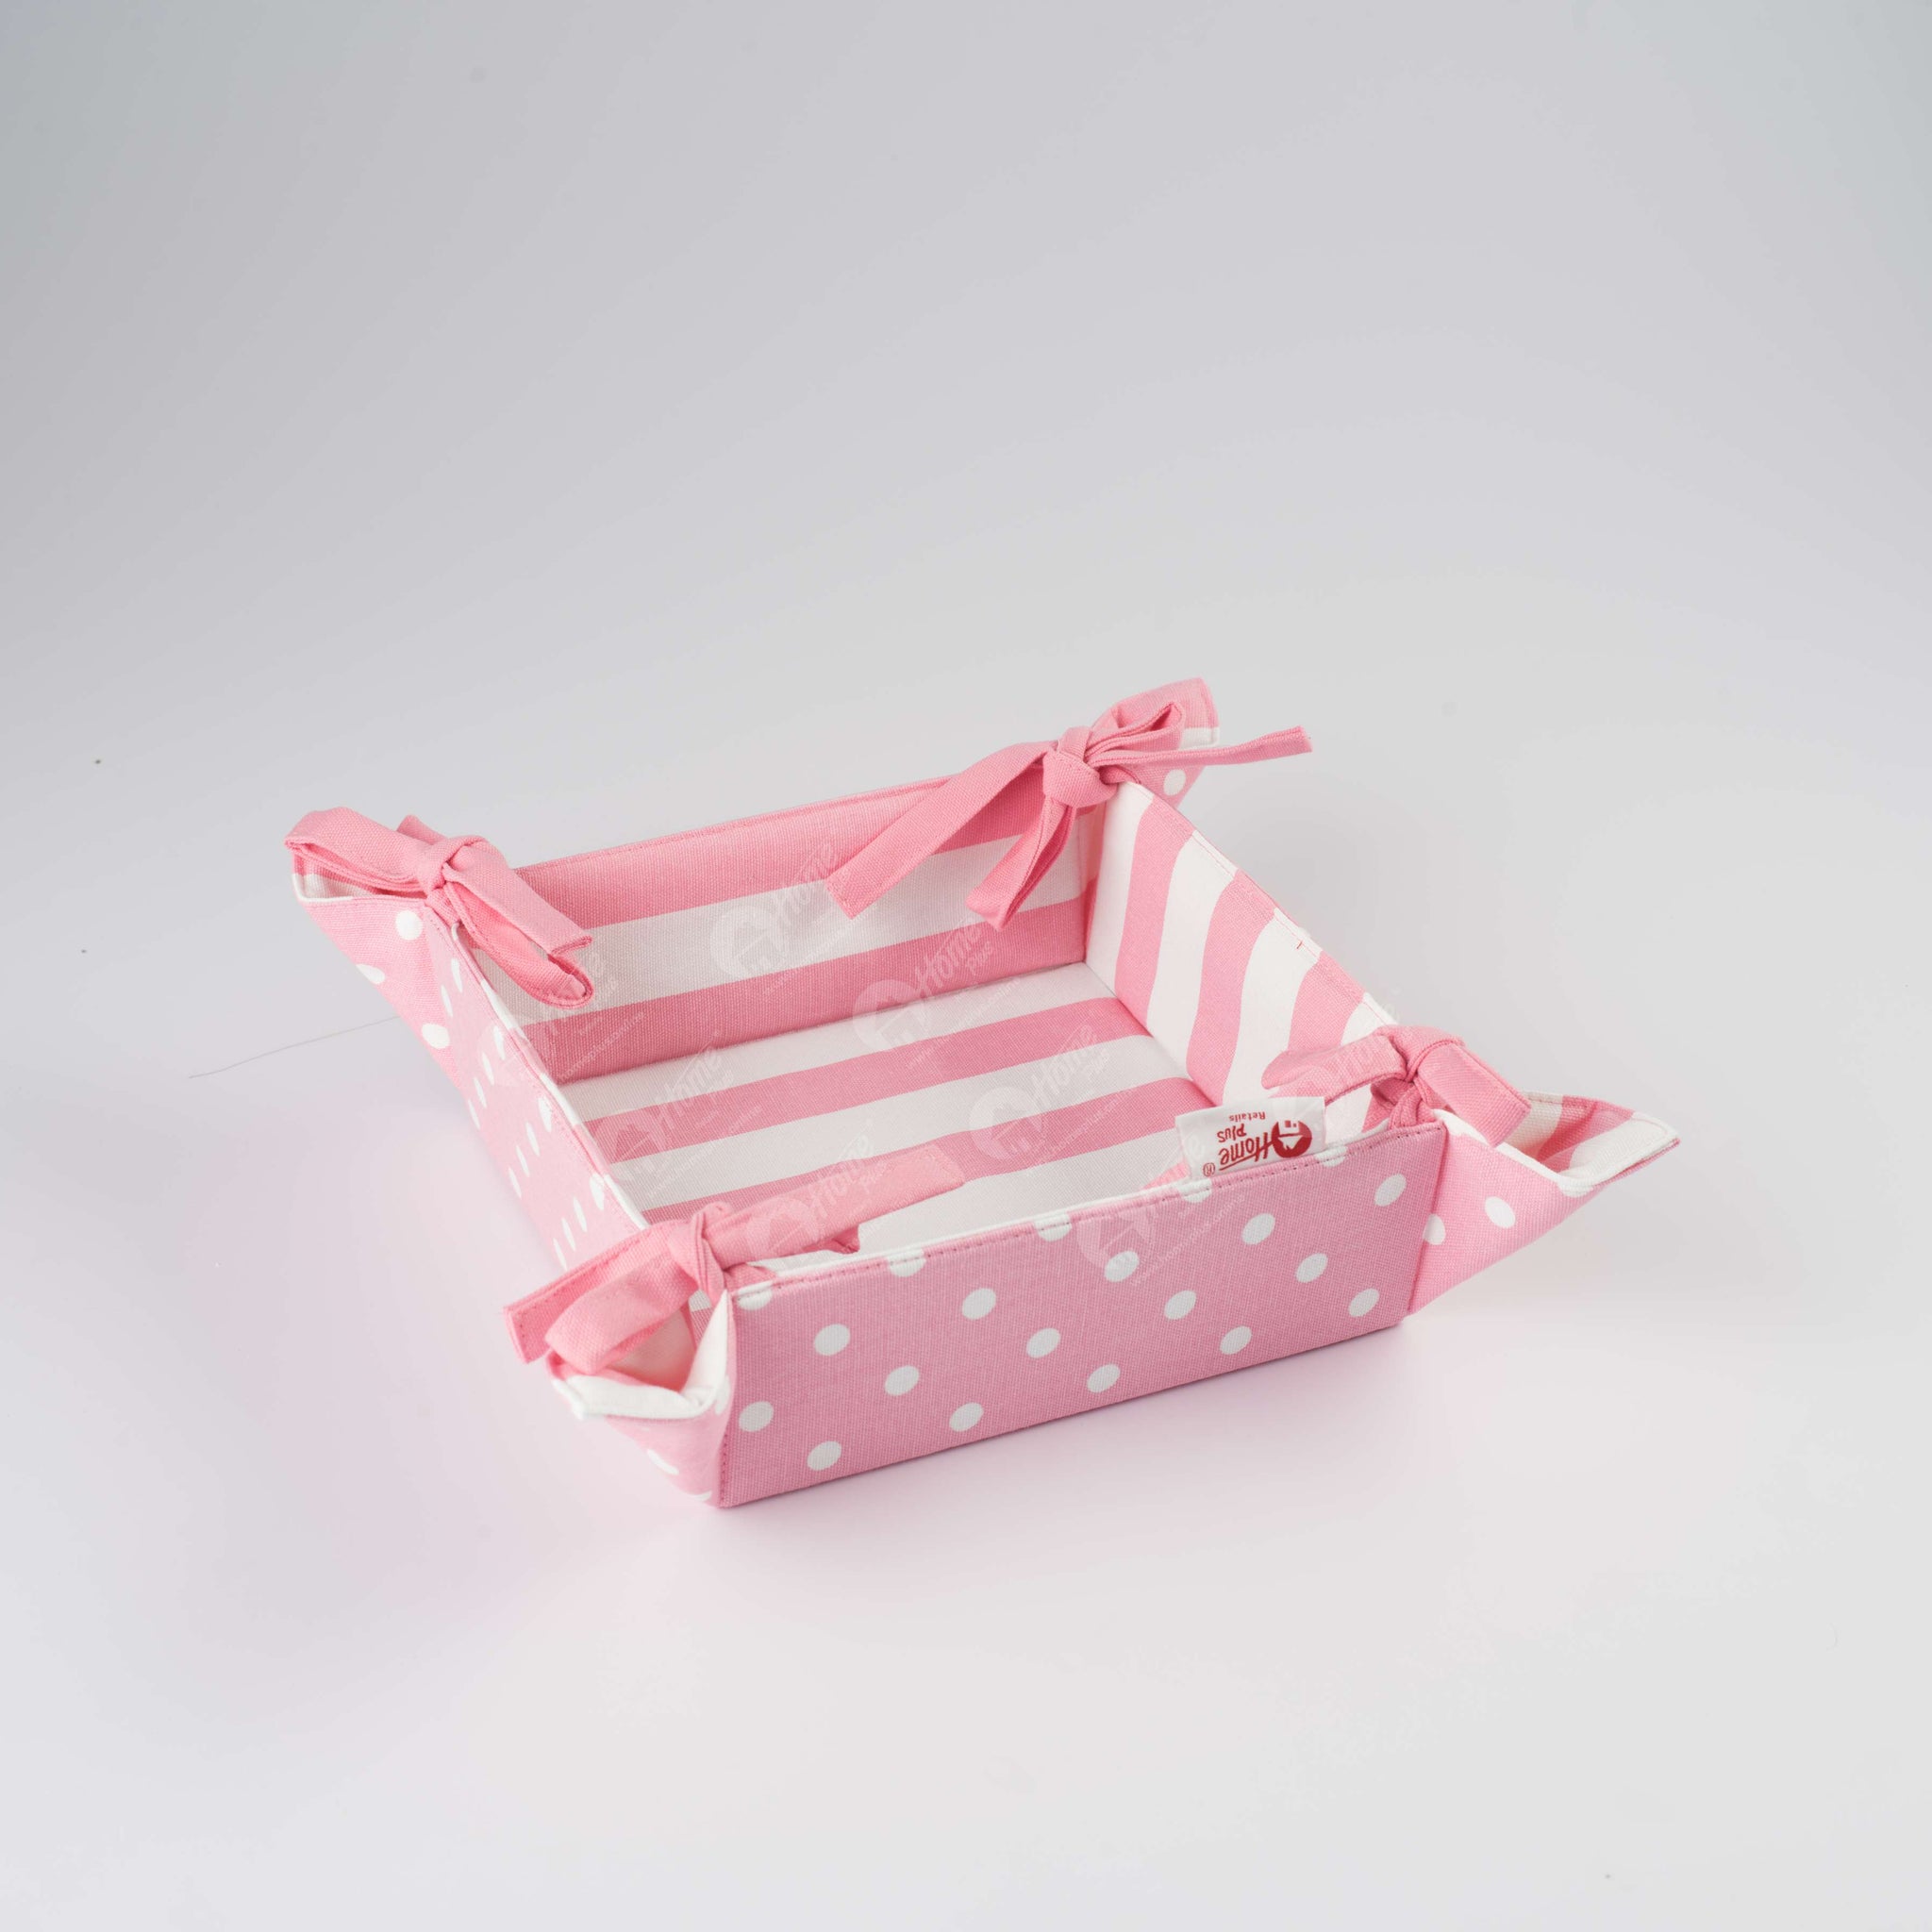 Bread Basket - Polka Dot Pink